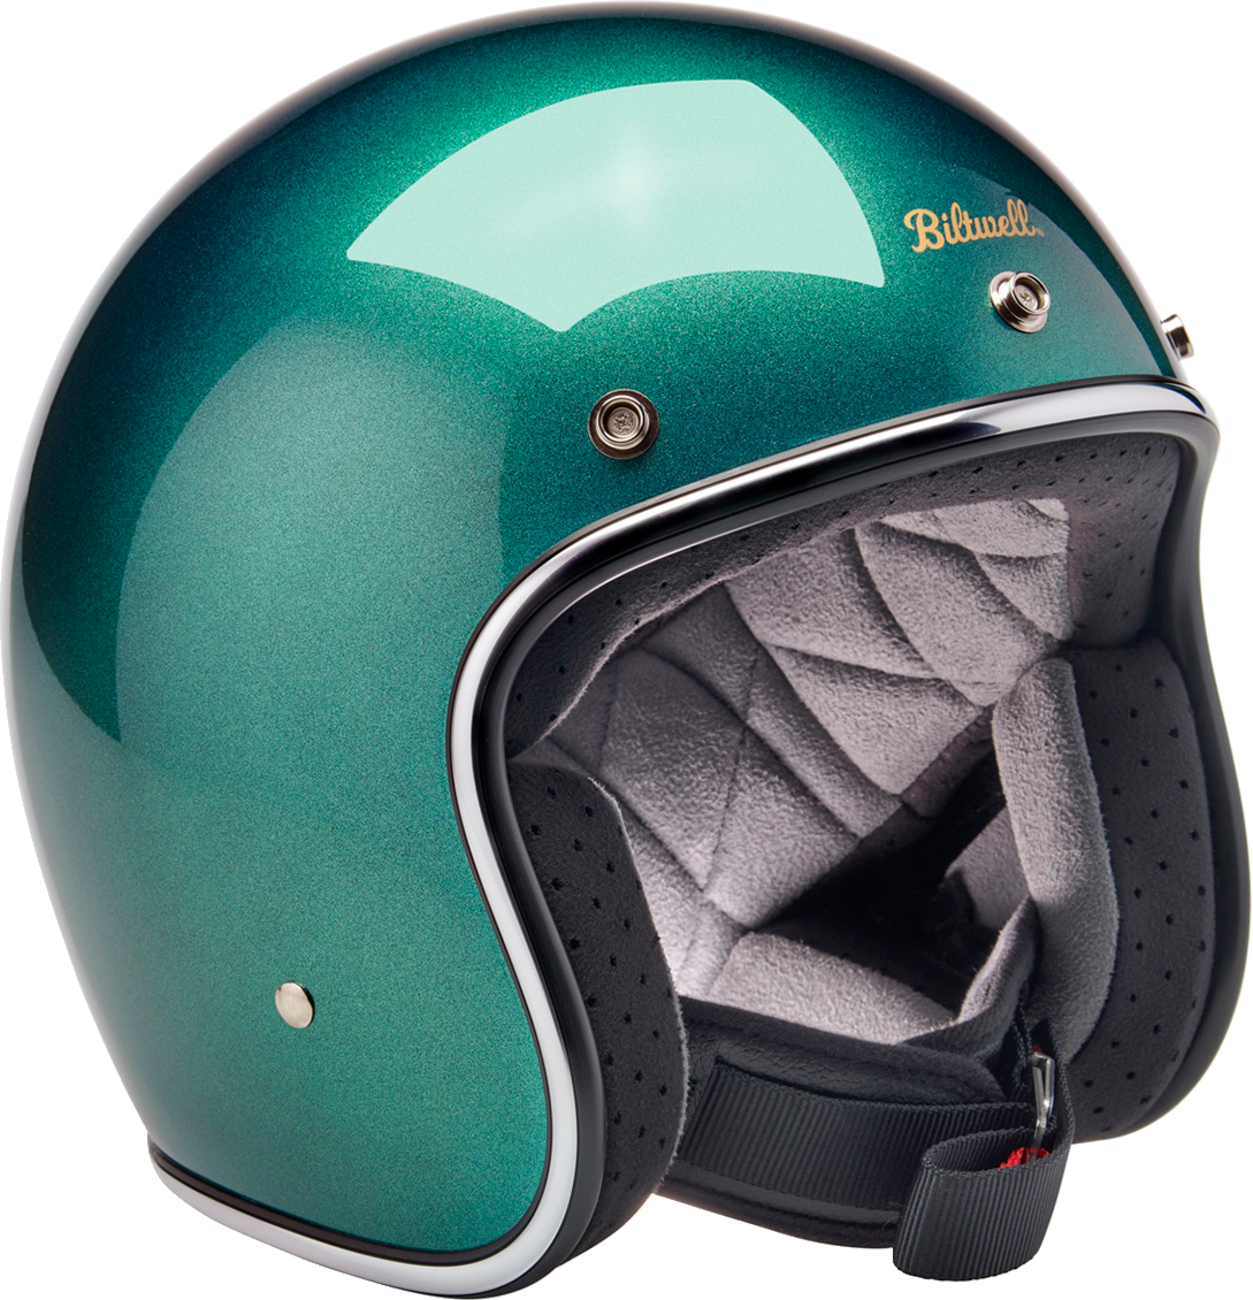 BILTWELL Bonanza Helmet - Metallic Catalina Green - Large 1001-358-204